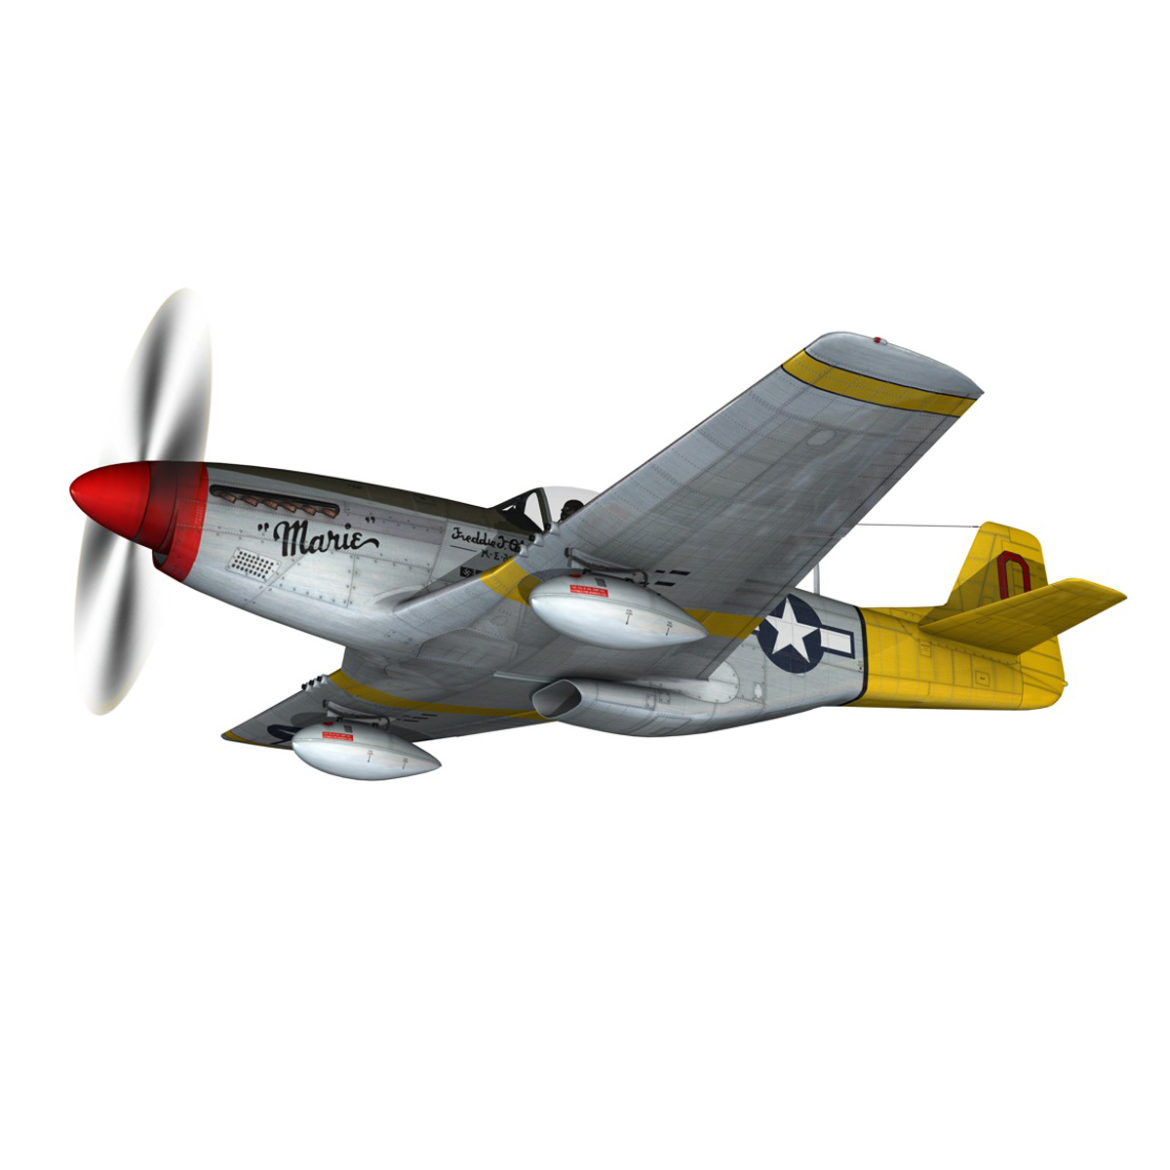 north american p-51d mustang – marie 3d model fbx c4d lwo obj 294300